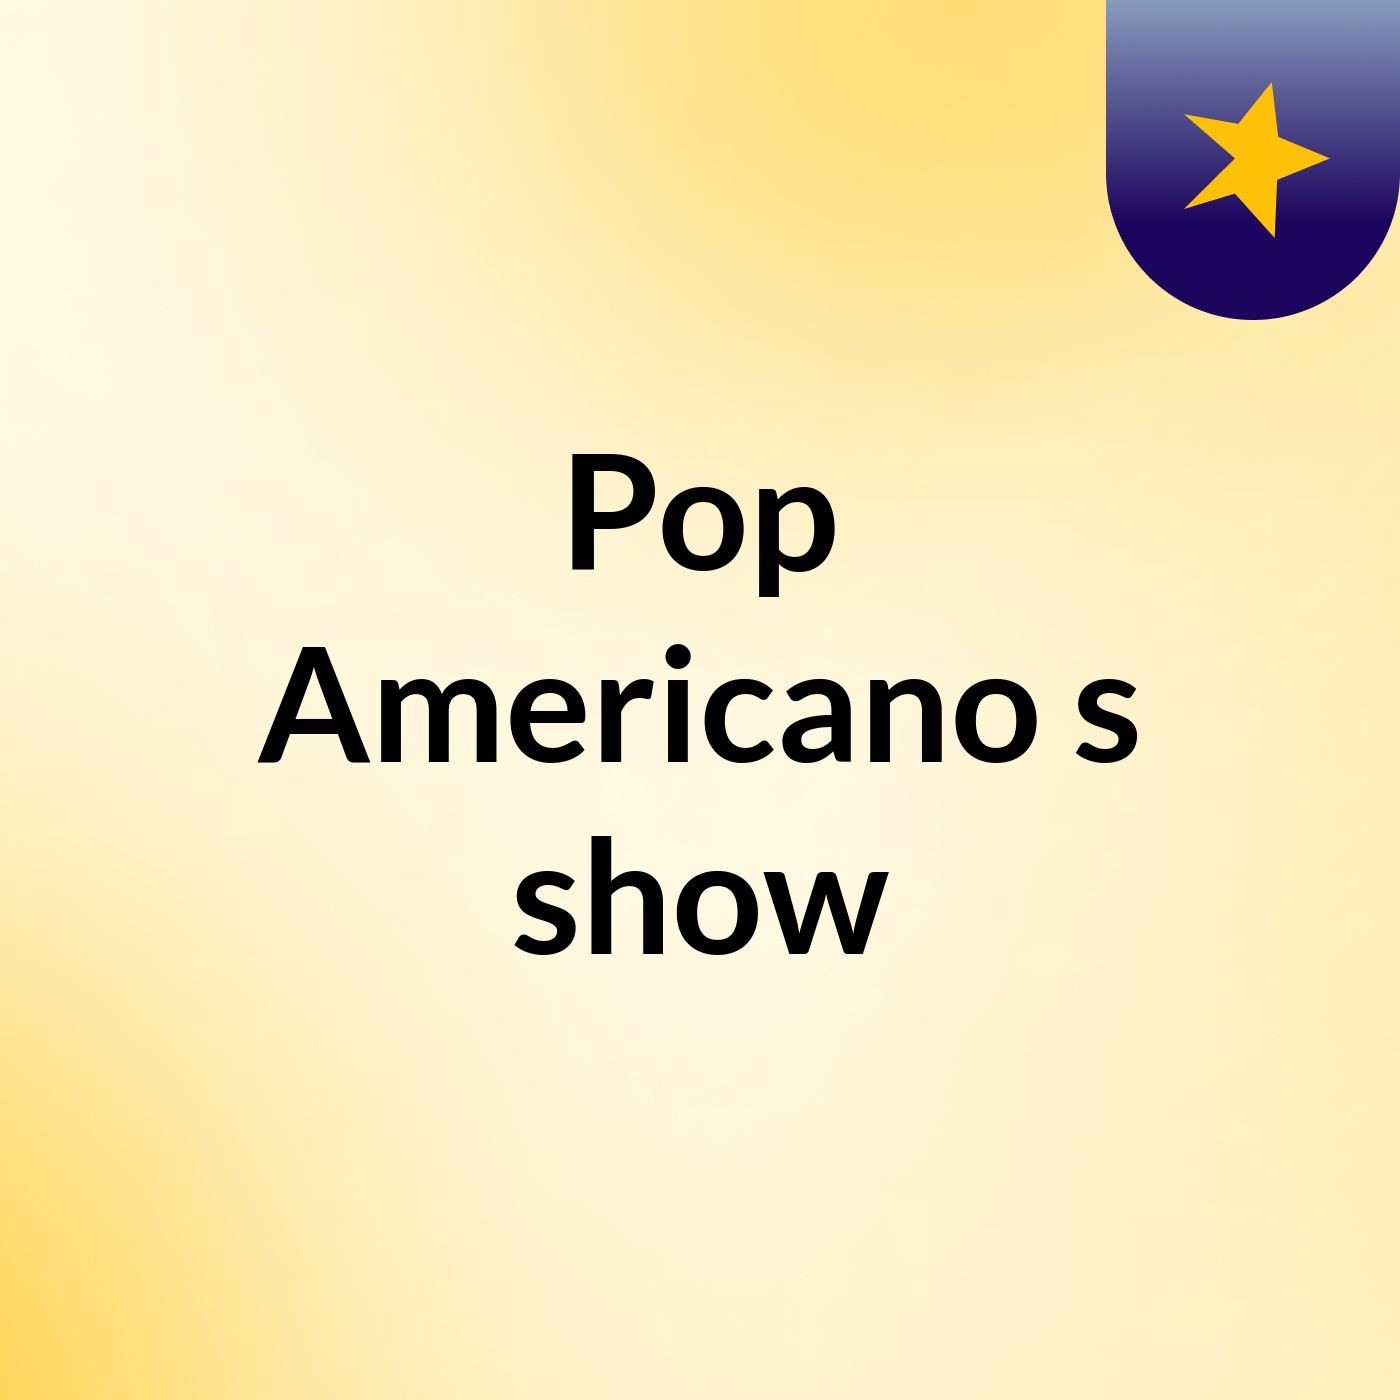 Pop Americano's show